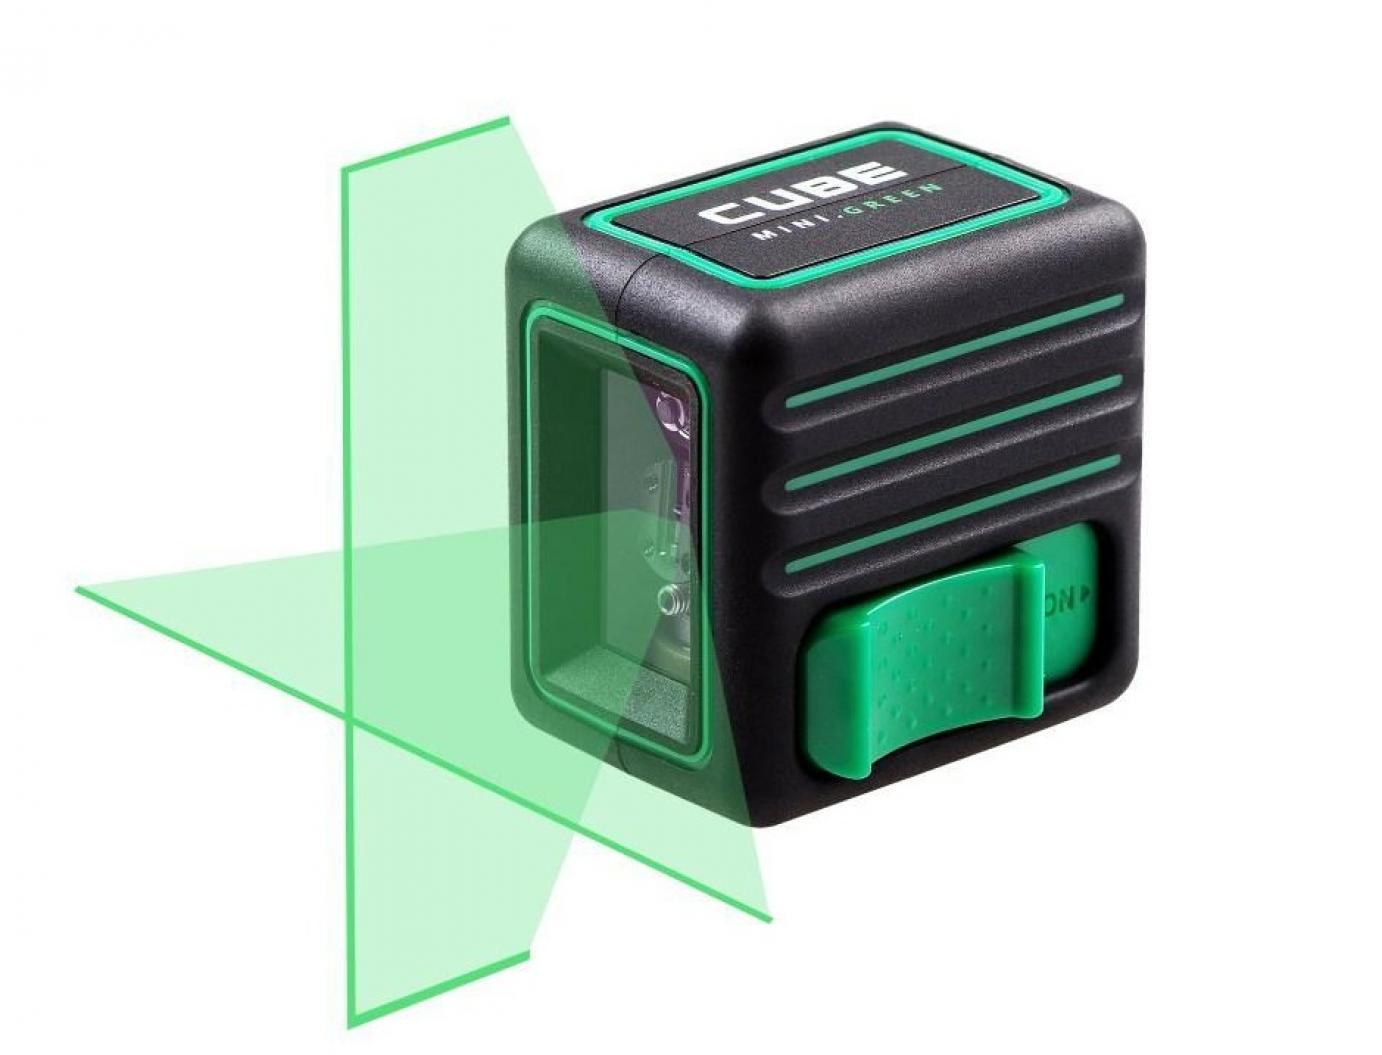 Cube mini basic edition. Лазерный нивелир ada Cube professional Edition. Лазерный уровень ada Cube Mini Green Basic Edition. Уровень лазерный ada Cube Mini professional Edition (а00462). Ada Cube Mini Green.